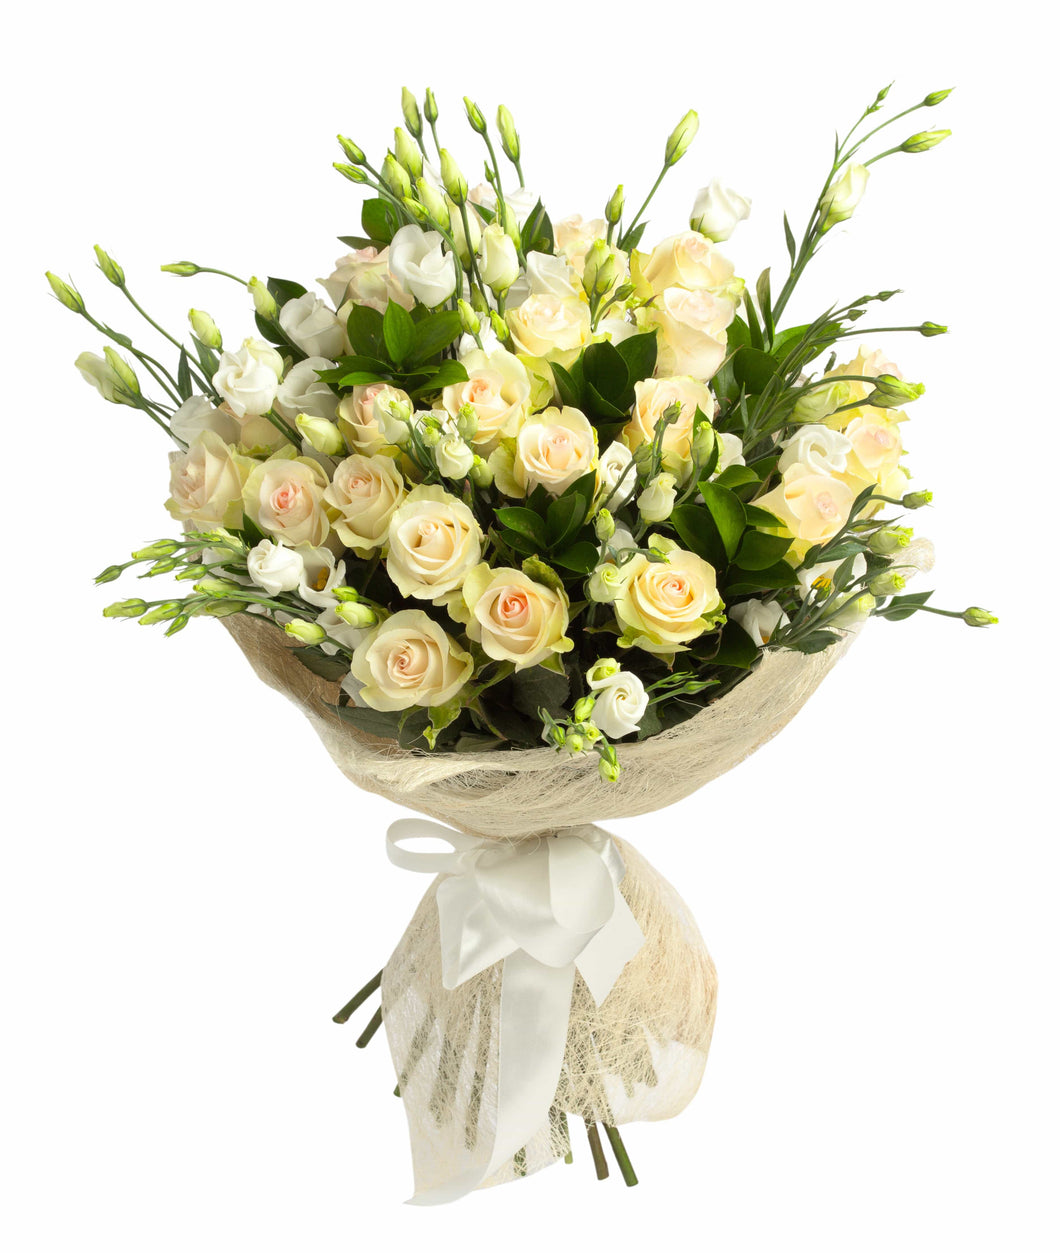 A Simple & Classy White Fresh Flower Bouquet - Strelitzia's Floristry & Irish Craft Shop